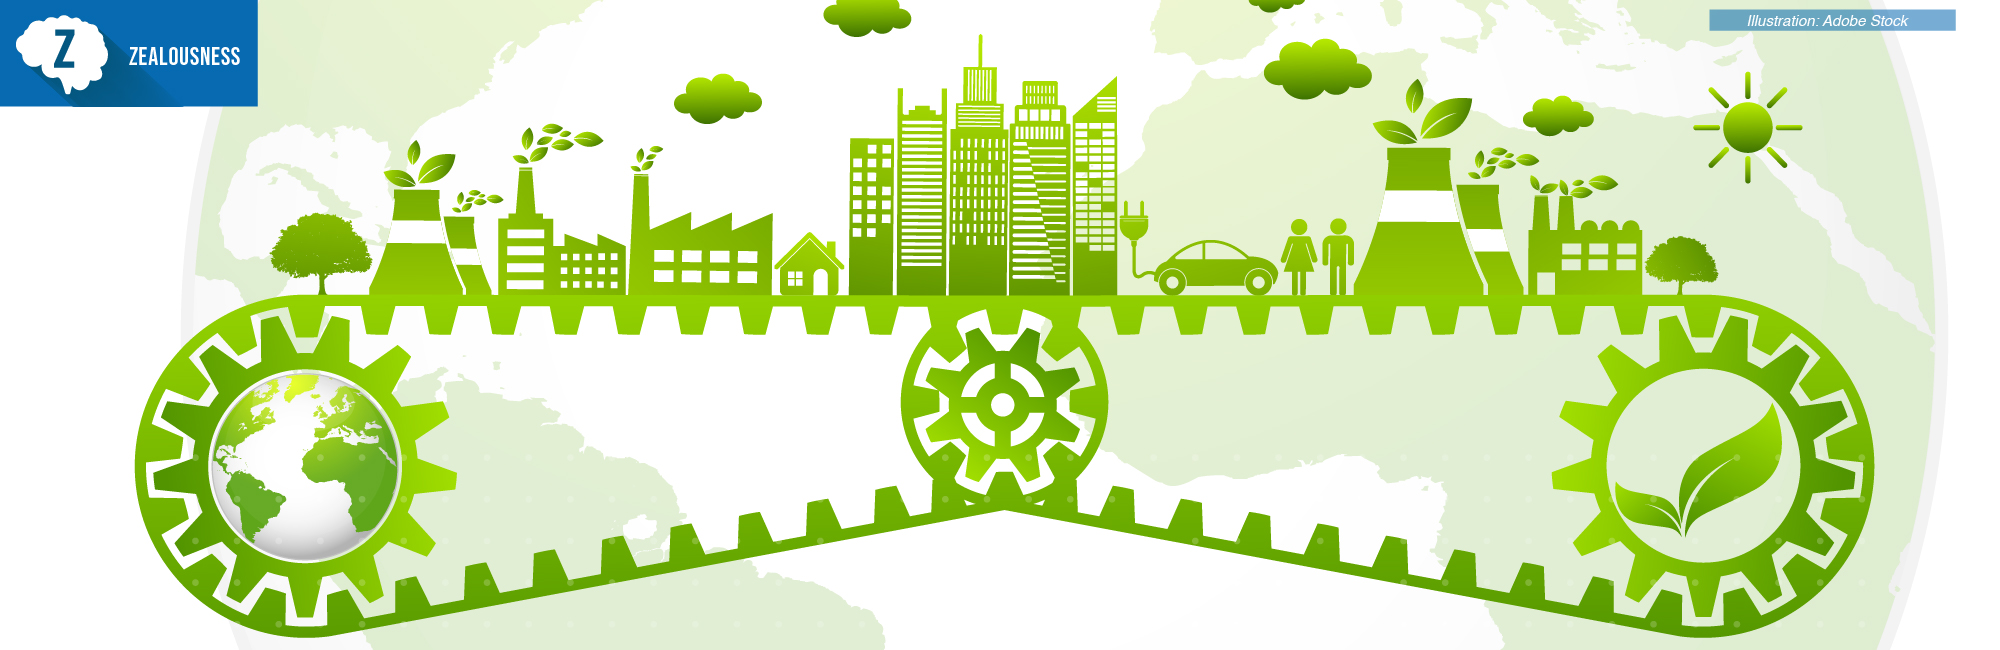 saving and ecology-friendly concept World environmental Vector illustration